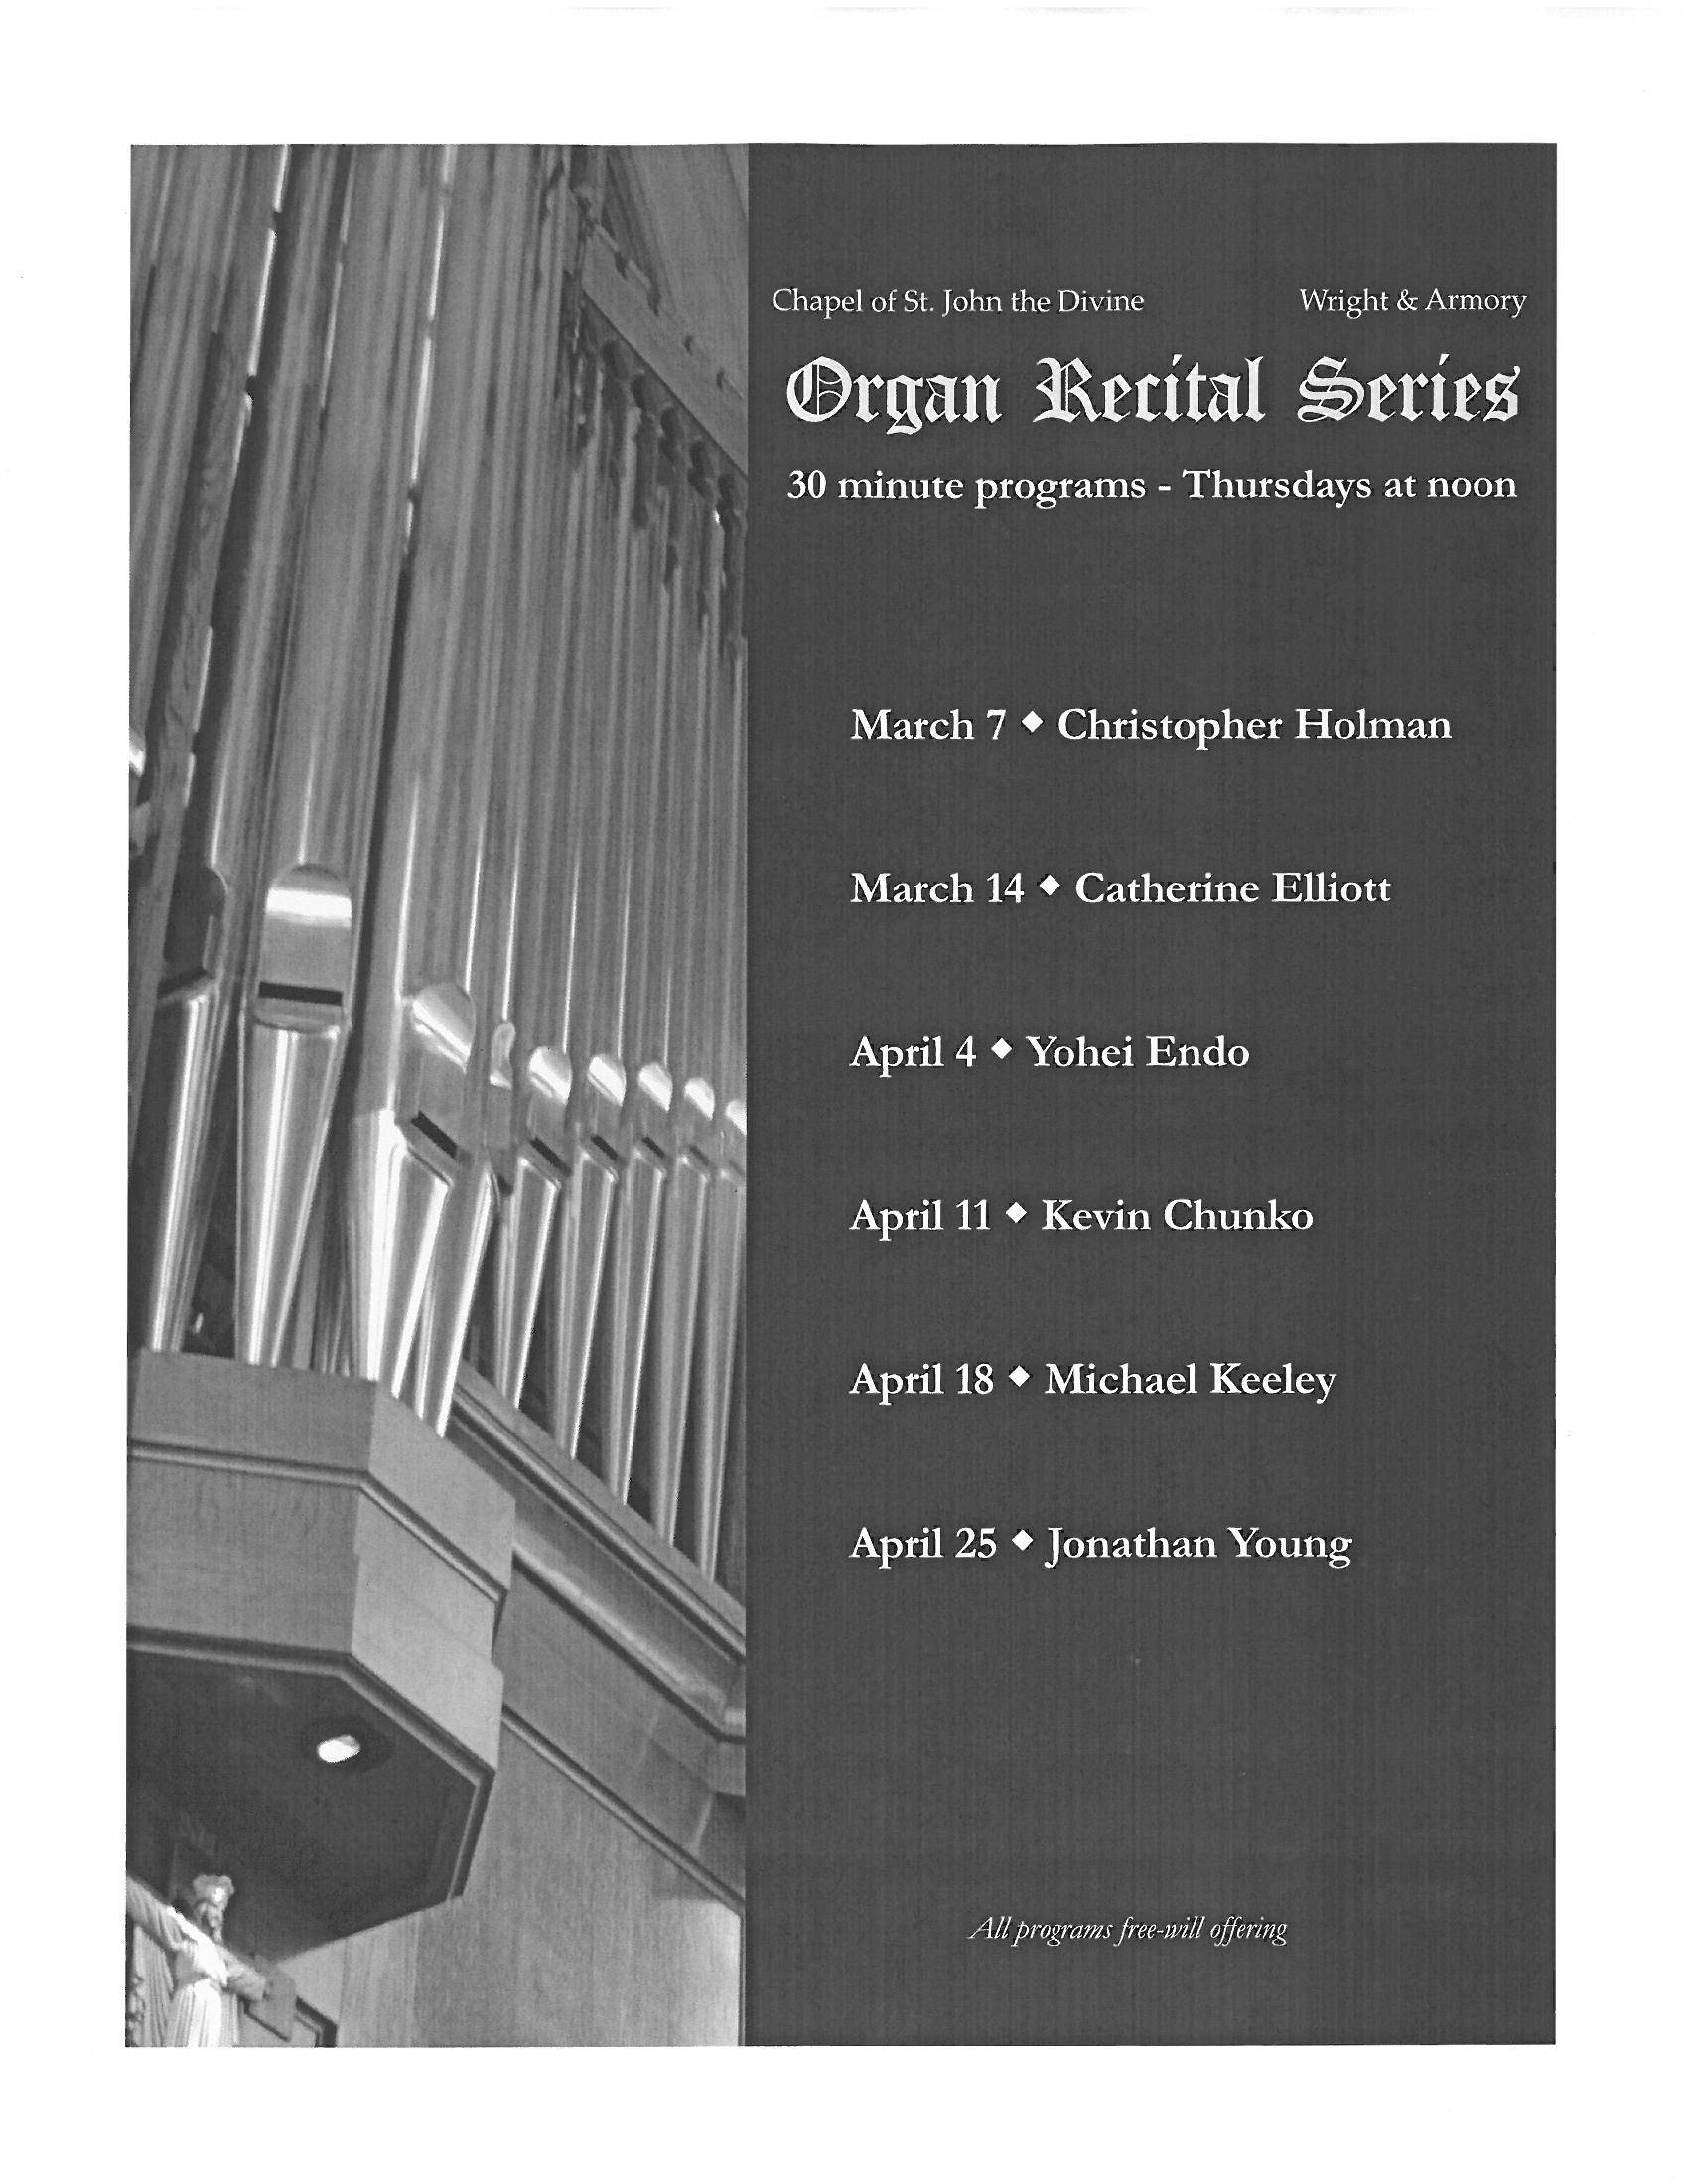 Noonday Organ Recital Series this Thursday